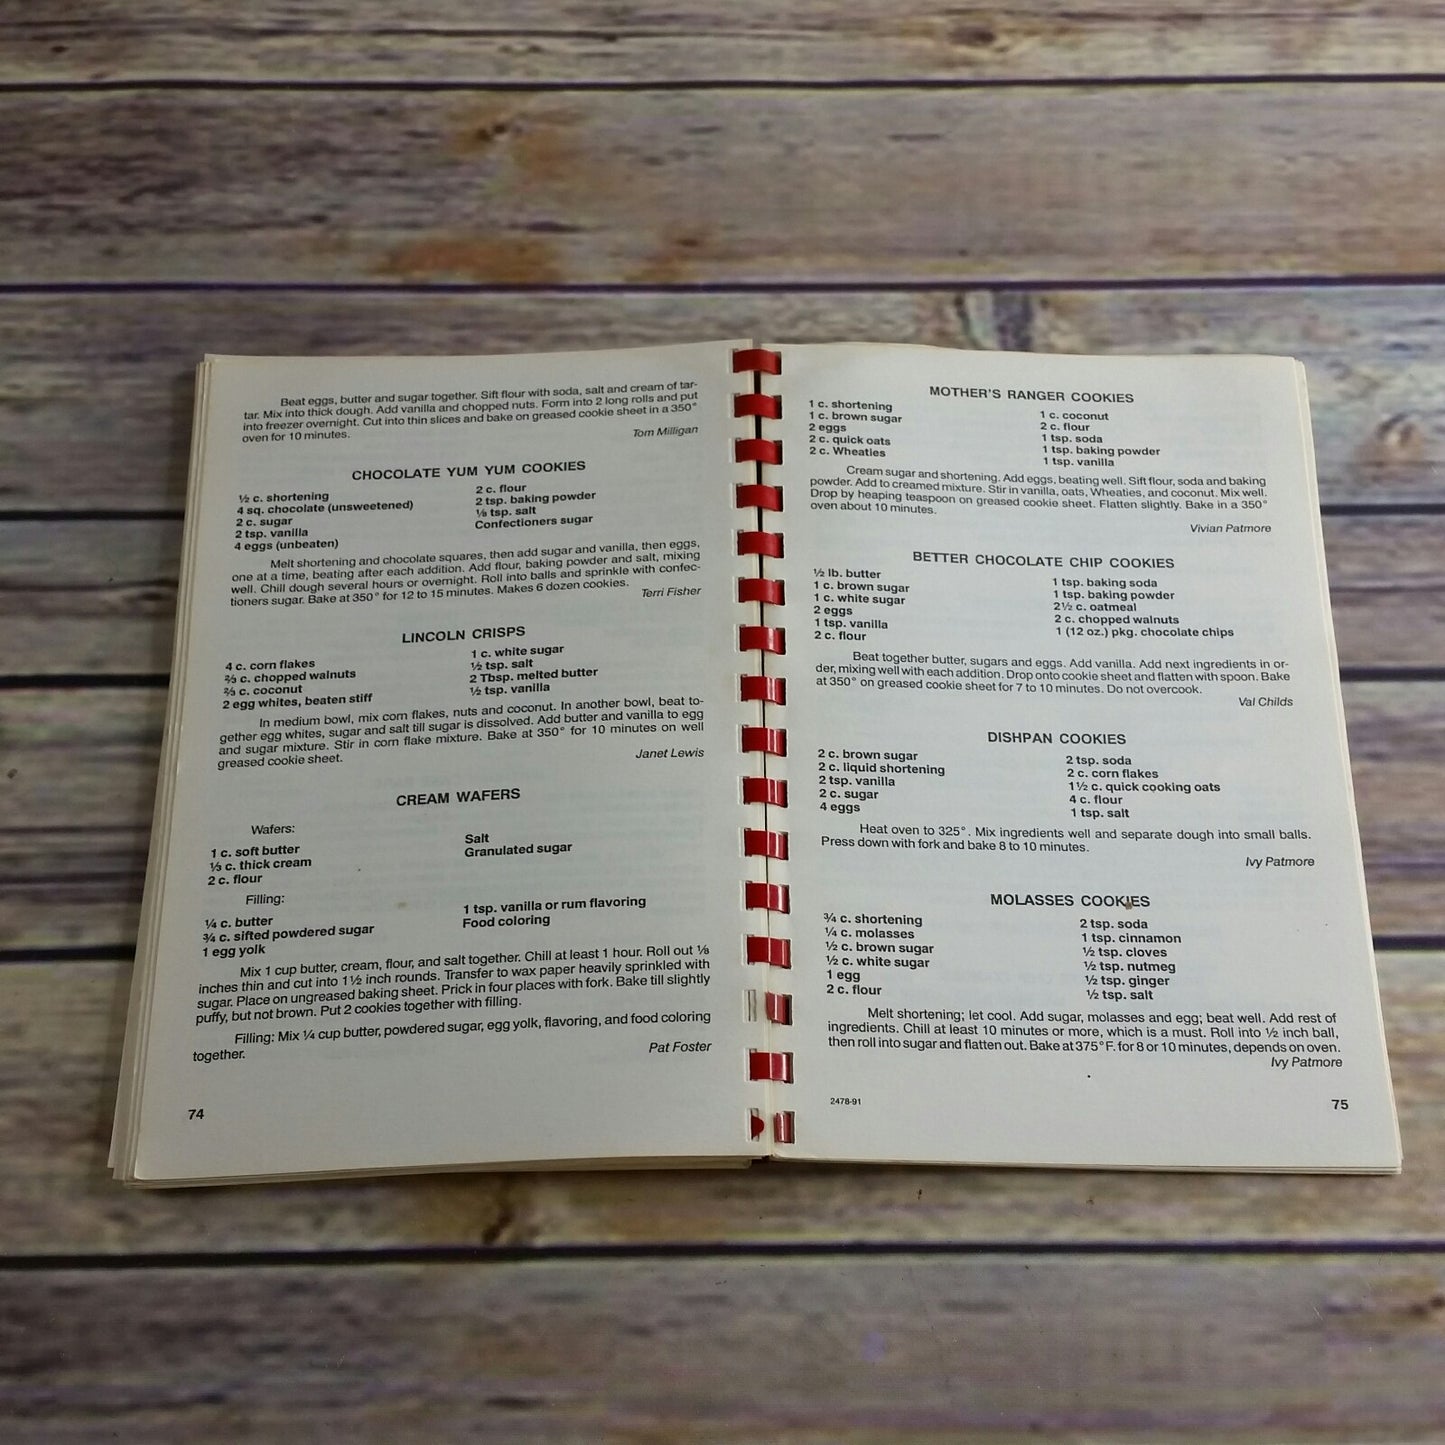 Vintage Oregon California Cookbook Grange Recipes From the Redwoods 1991 - At Grandma's Table